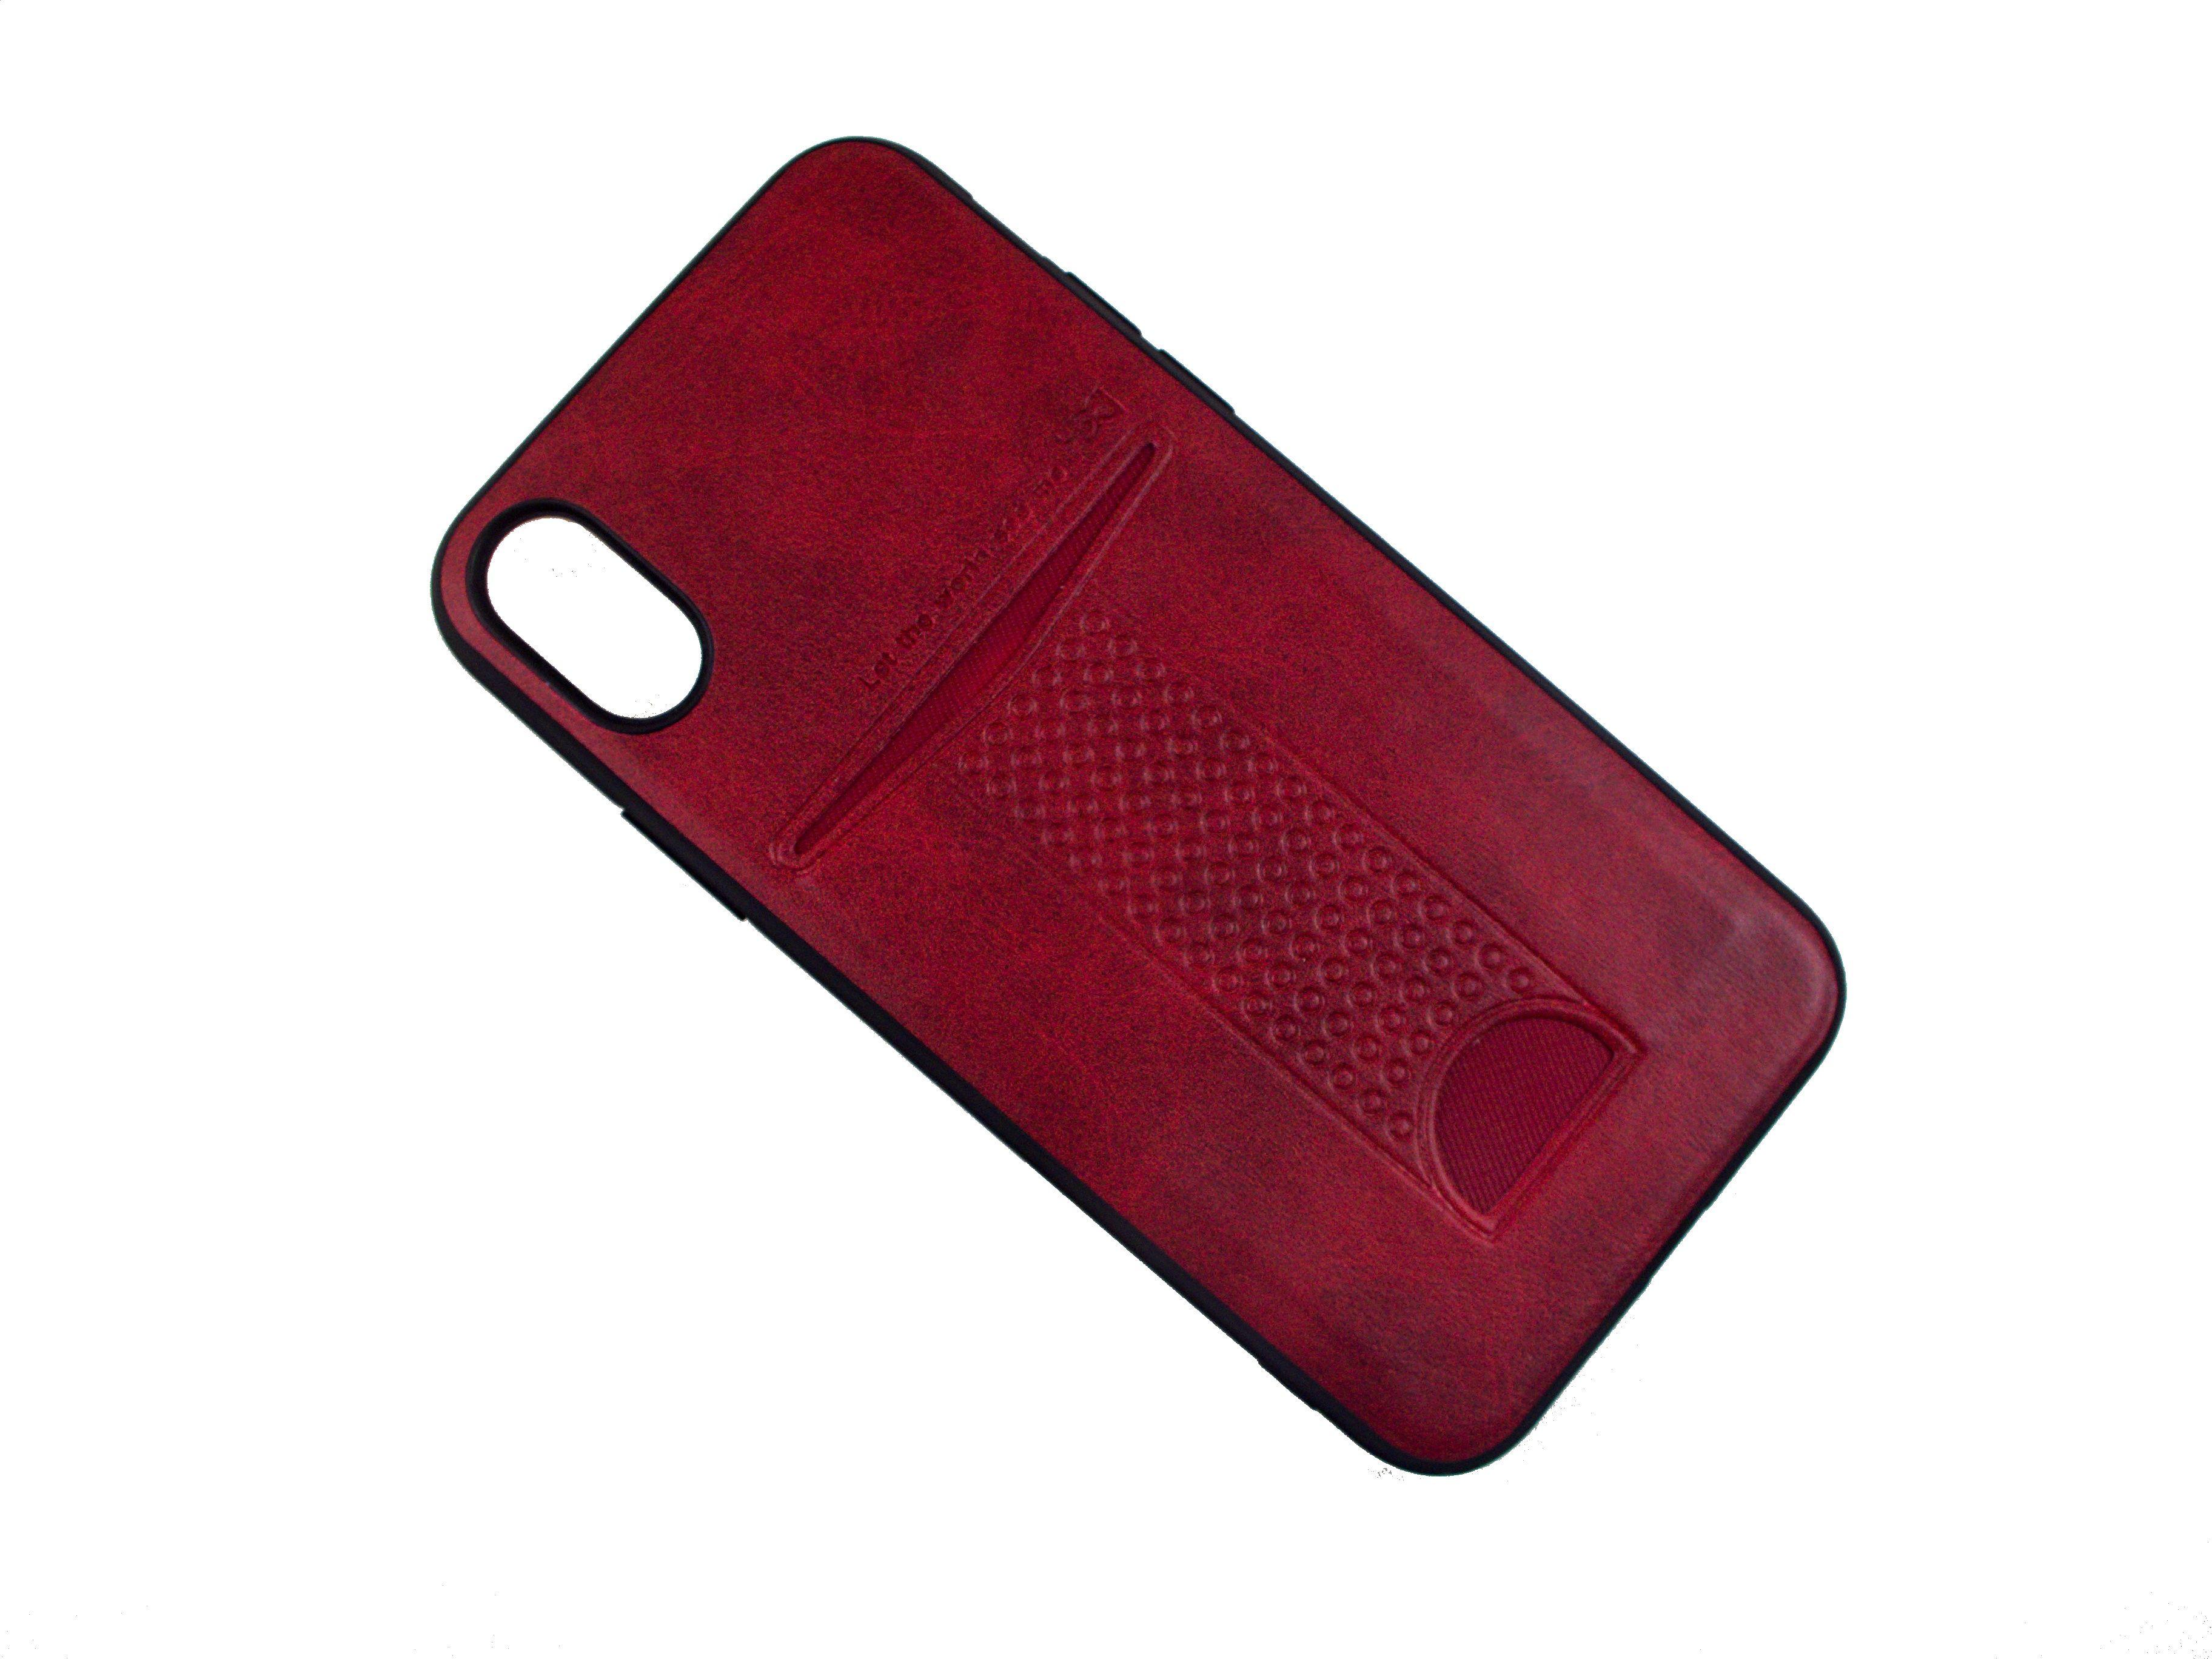 Precious Case iPhone X red